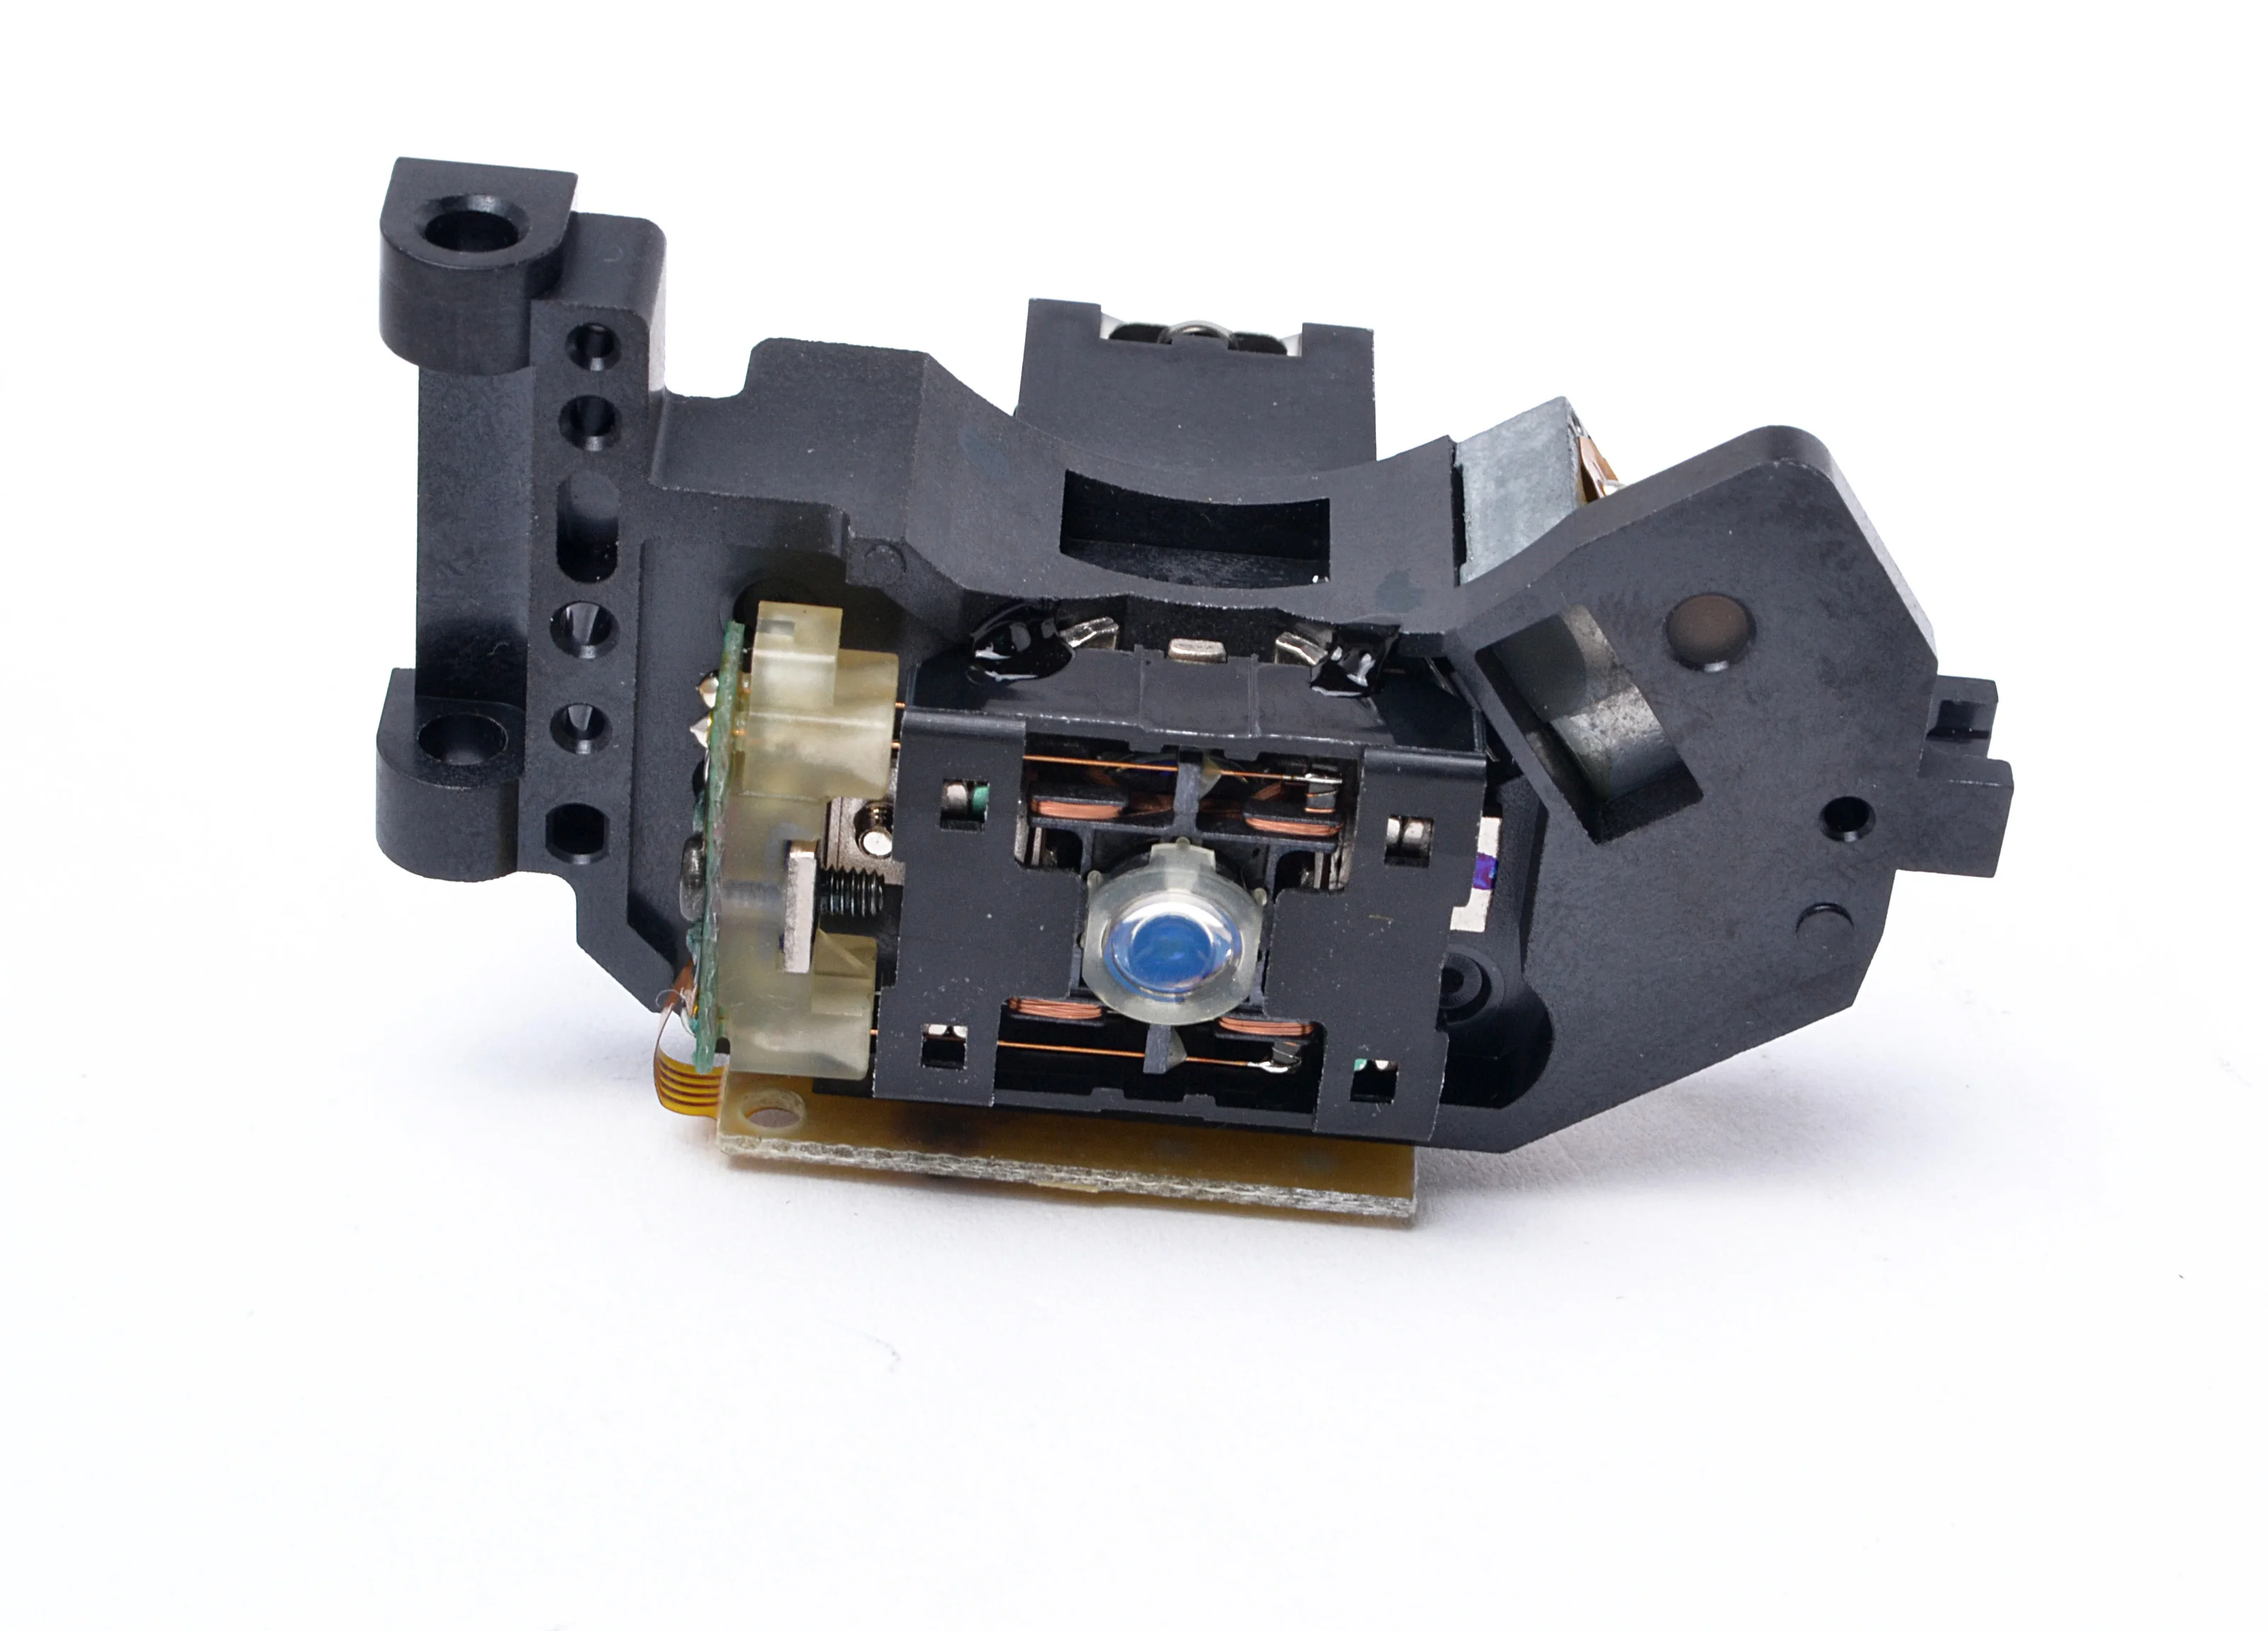 Replacement for Marantz DV-3110 DV3110 DV 3110 Radio Player Optical Pick-ups Bloc Optique Laser Lens Lasereinheit